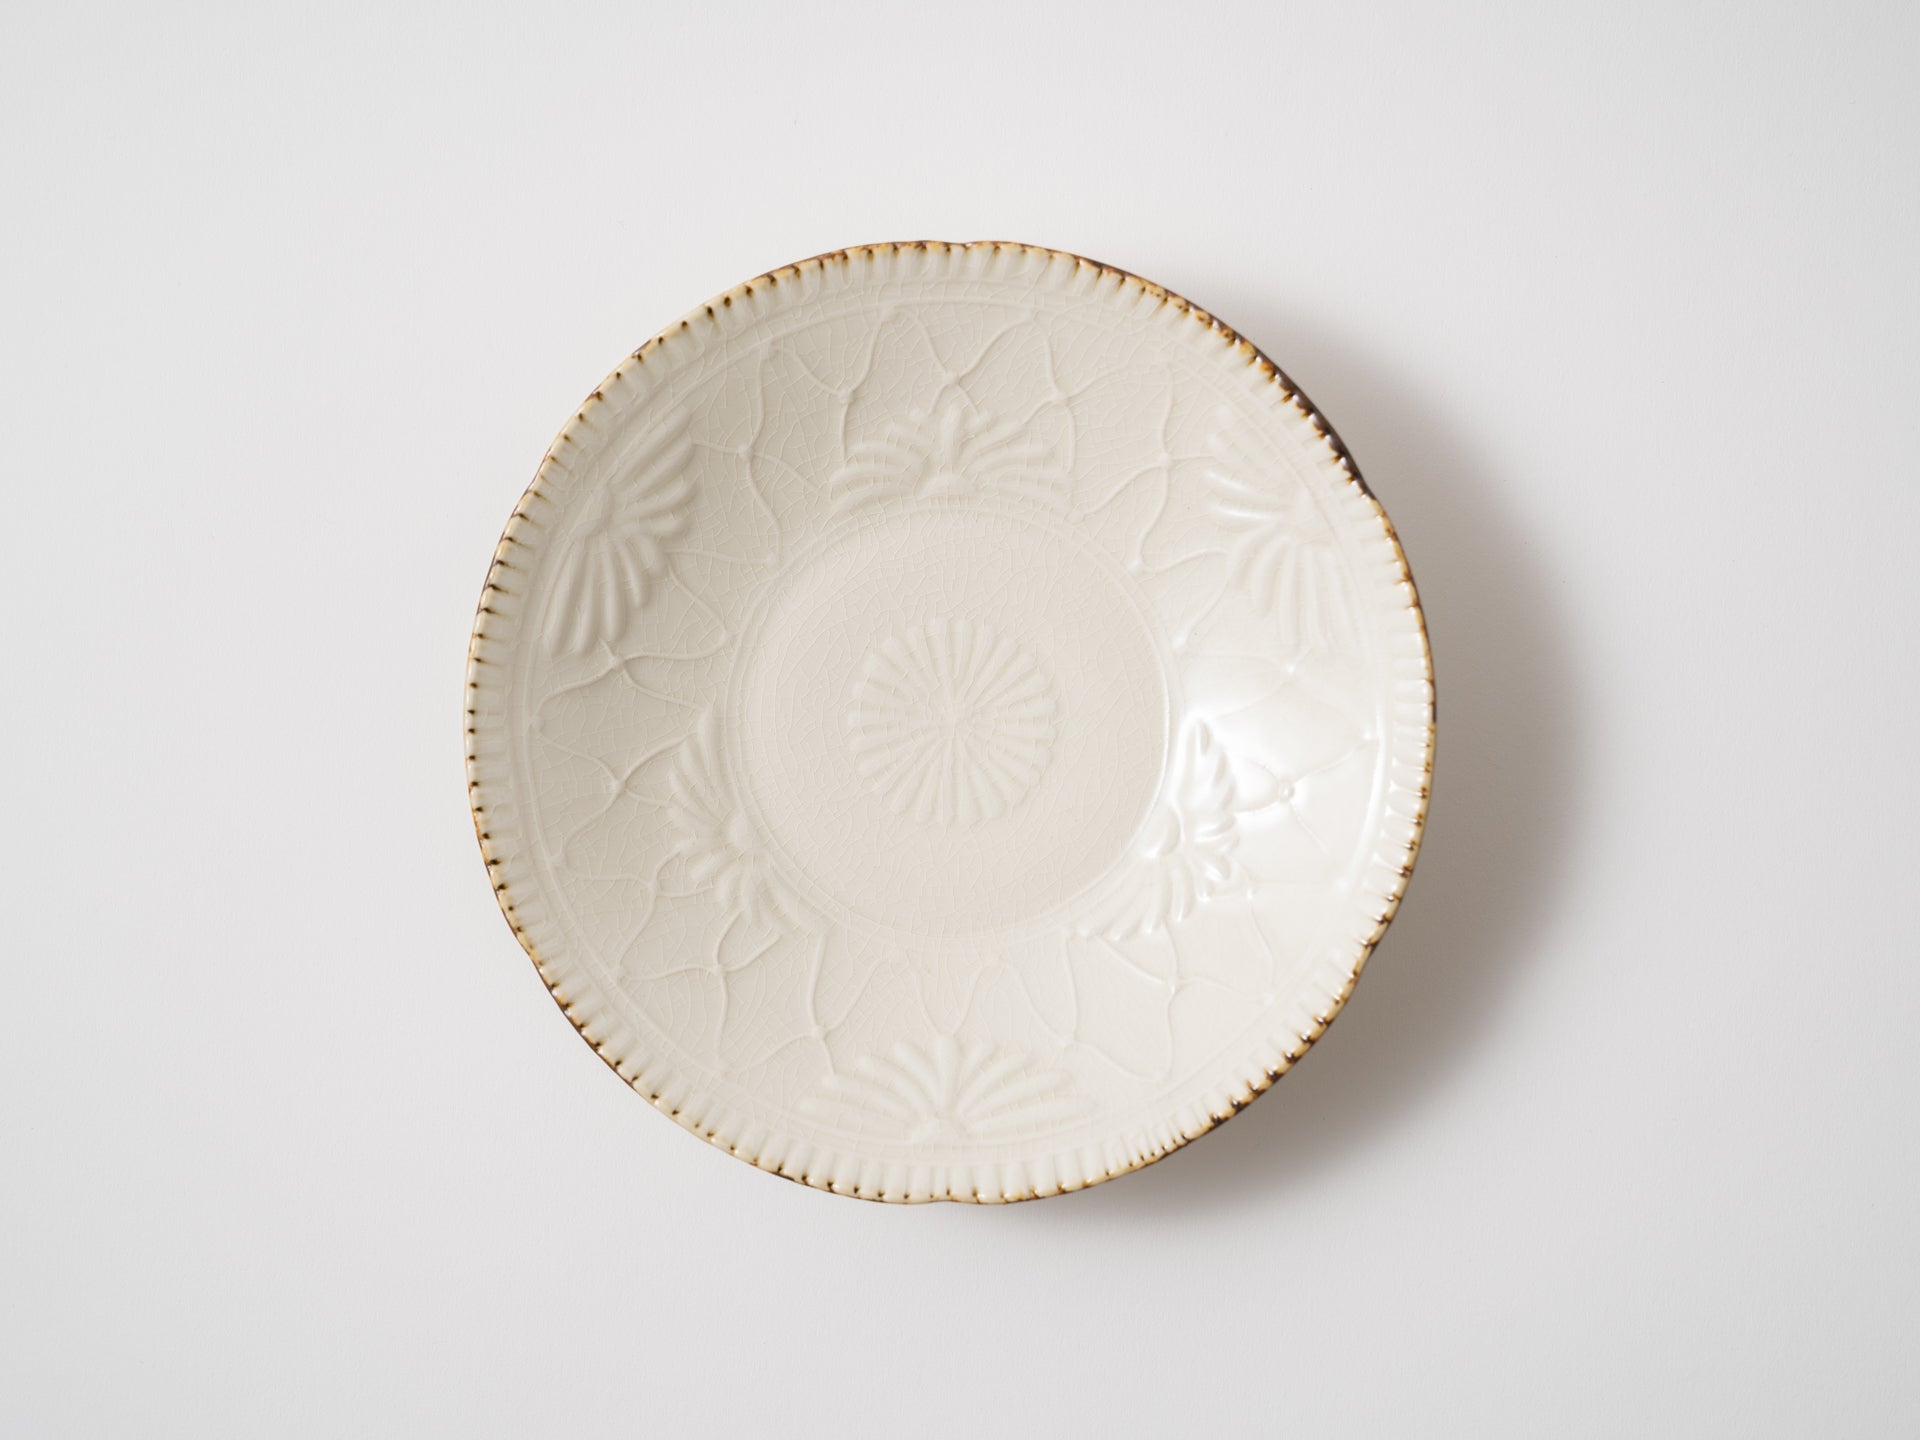 Half chrysanthemum mesh pattern 6-inch plate [Aki Murata]